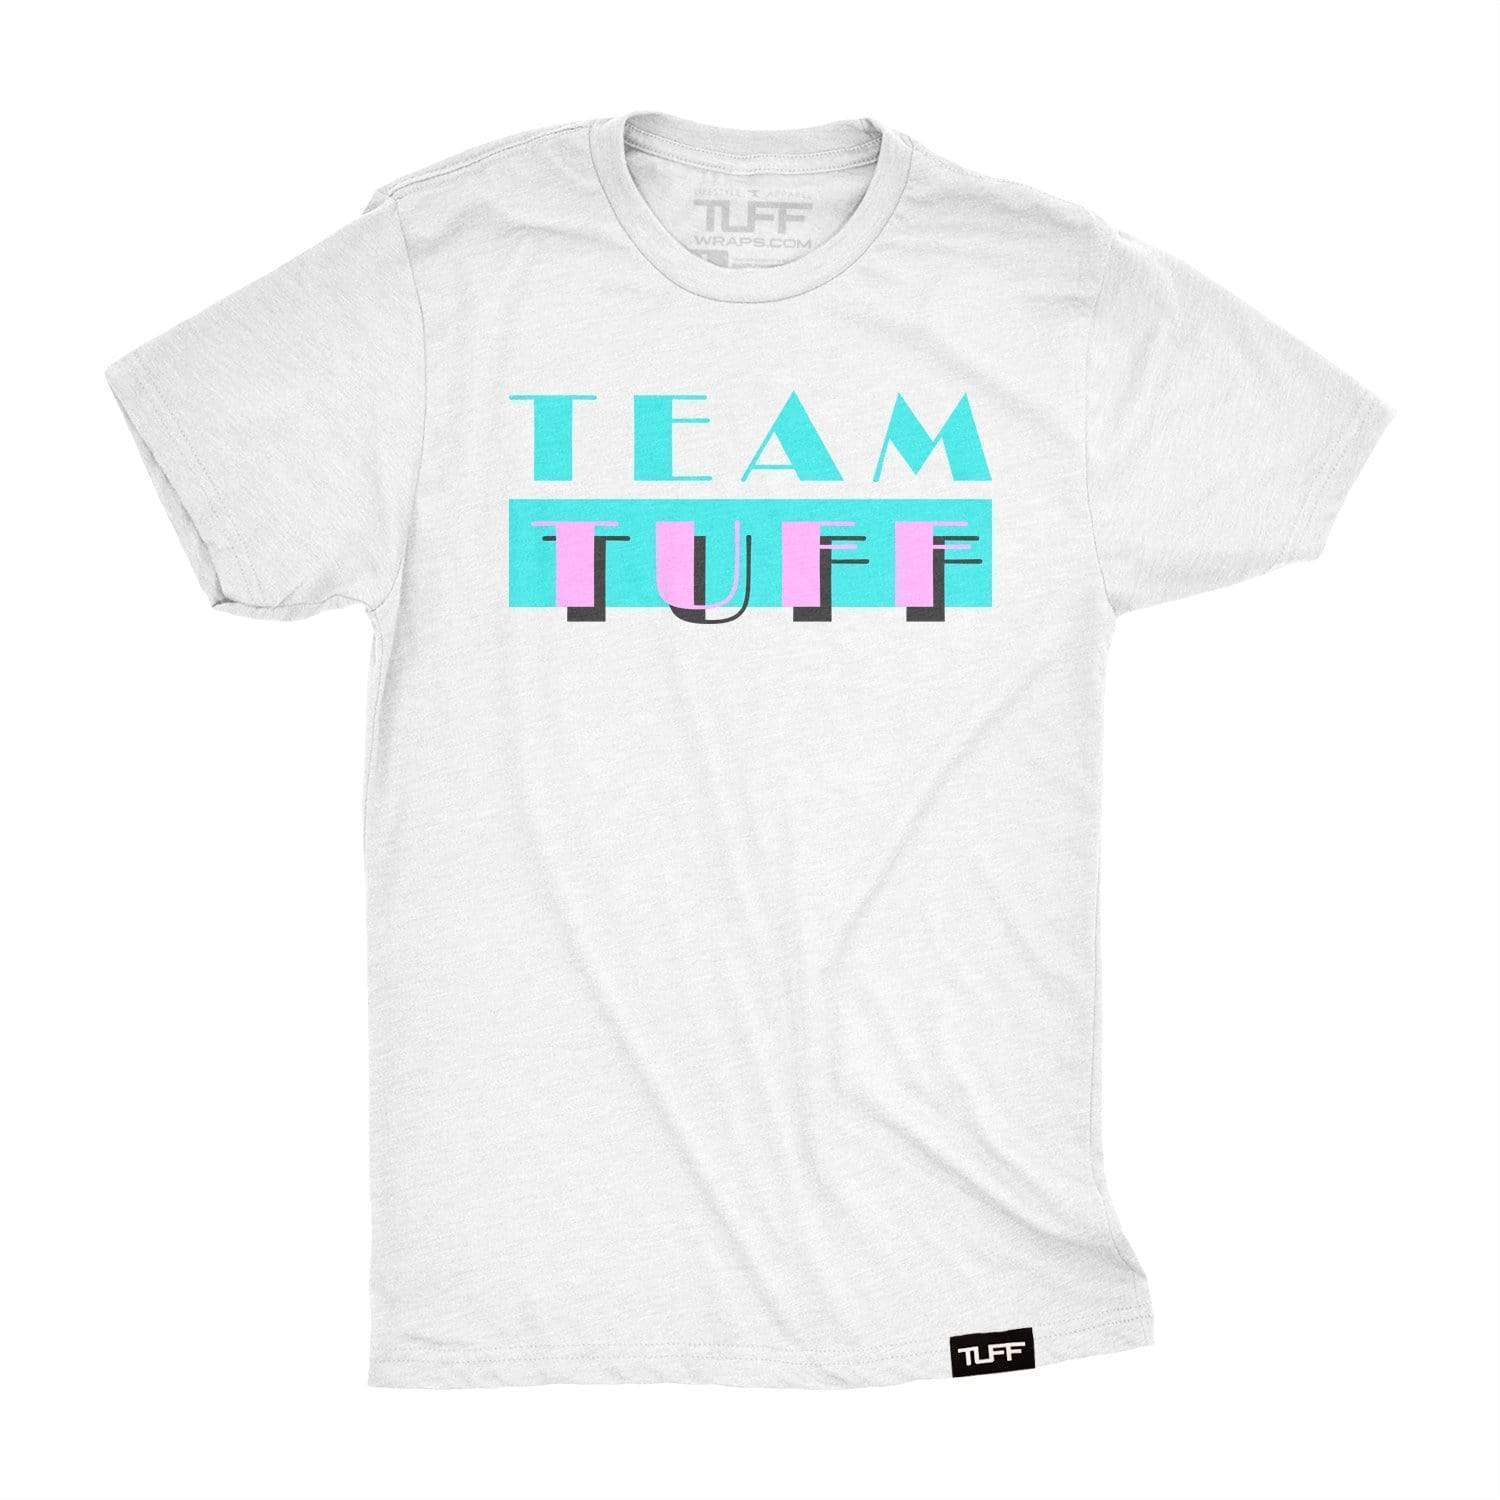 Team TUFF Retro Tee T-shirt